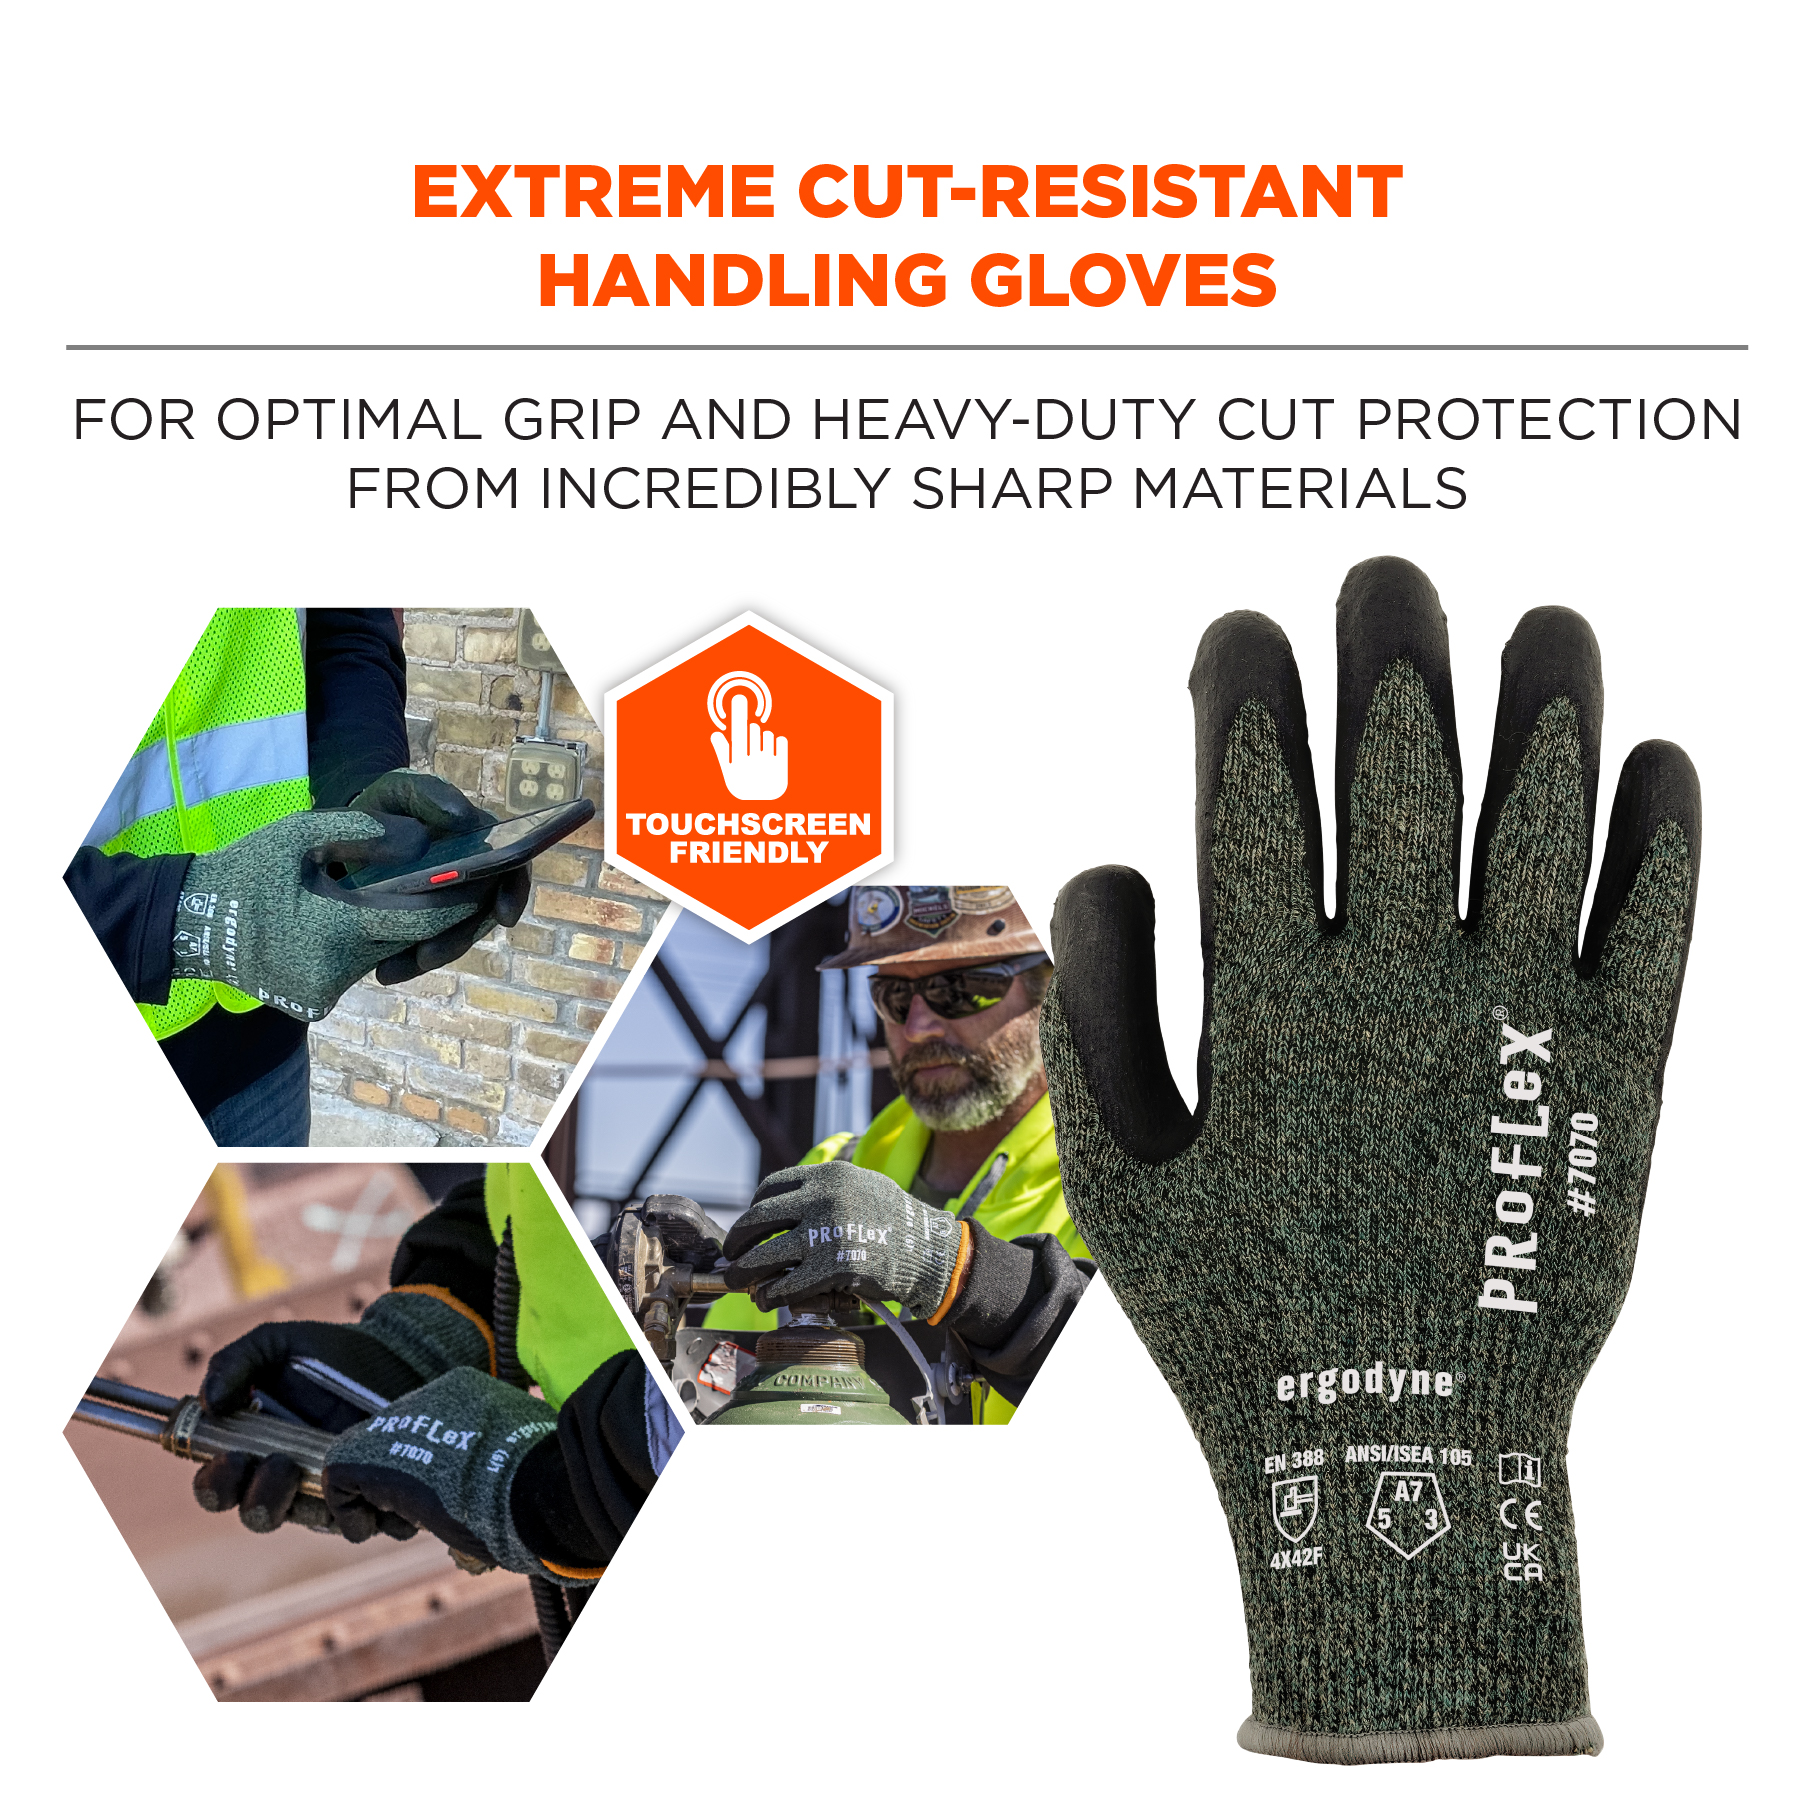 https://www.ergodyne.com/sites/default/files/product-images/18042-7070-ansi-a7-nitrile-coated-cr-gloves-green-extreme-cut-resistant-handling-gloves_0.jpg